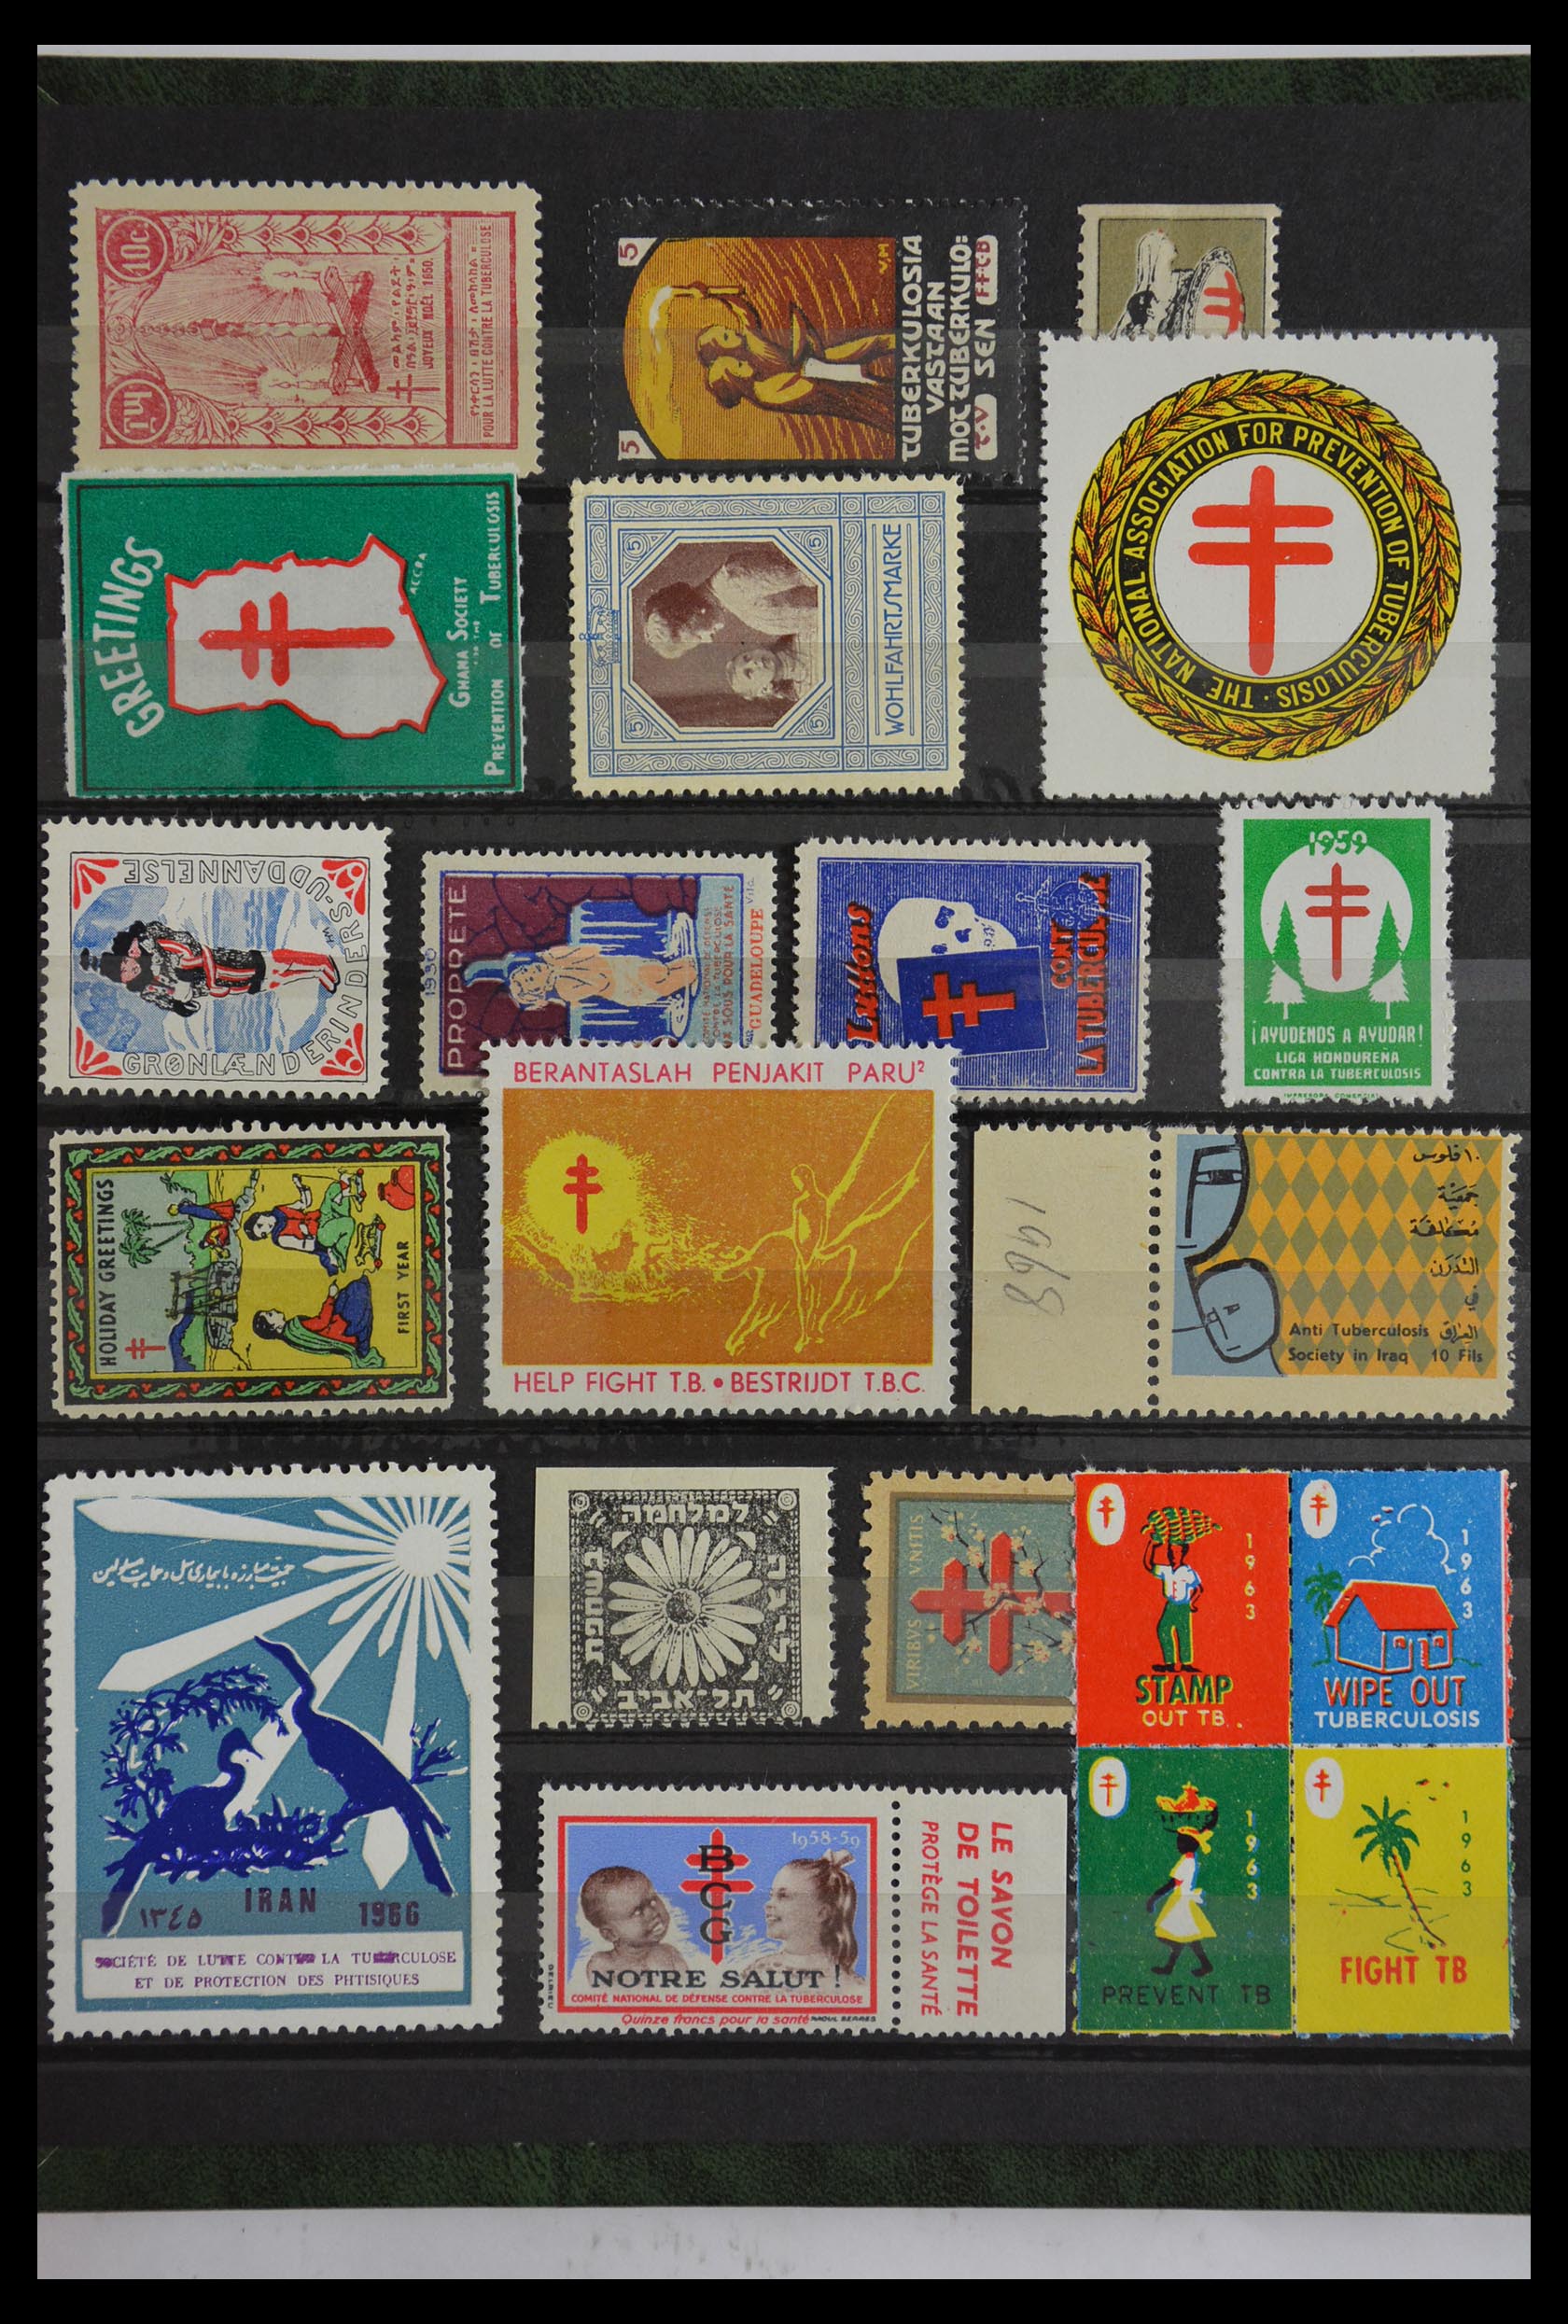 29658 485 - 29658 Kerst sluitzegels USA 1907-1970.